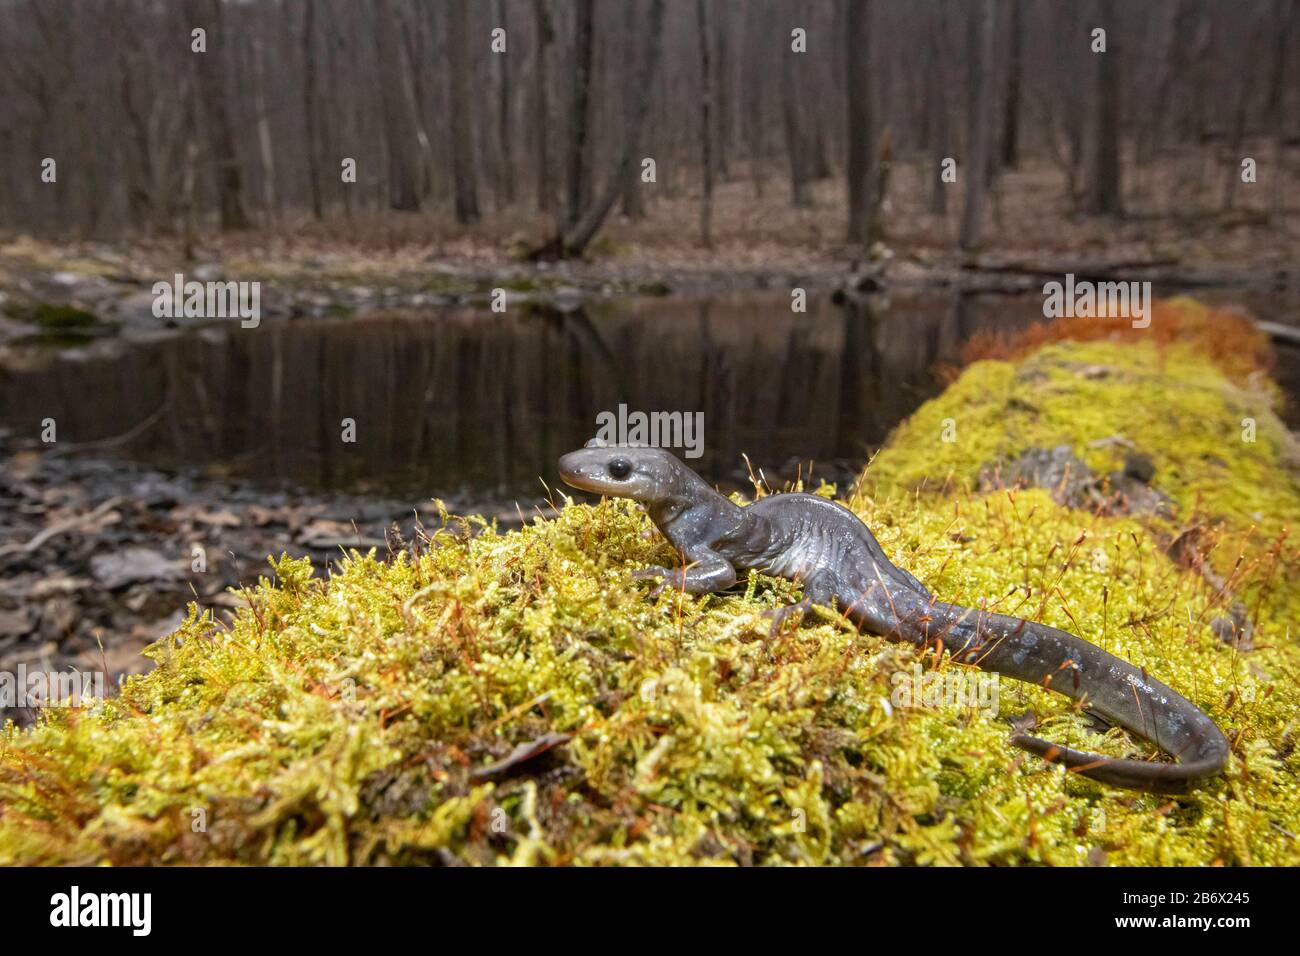 Jefferson Salamander in der Nähe eines Frühlingspools - Ambstoma jeffersonianum Stockfoto